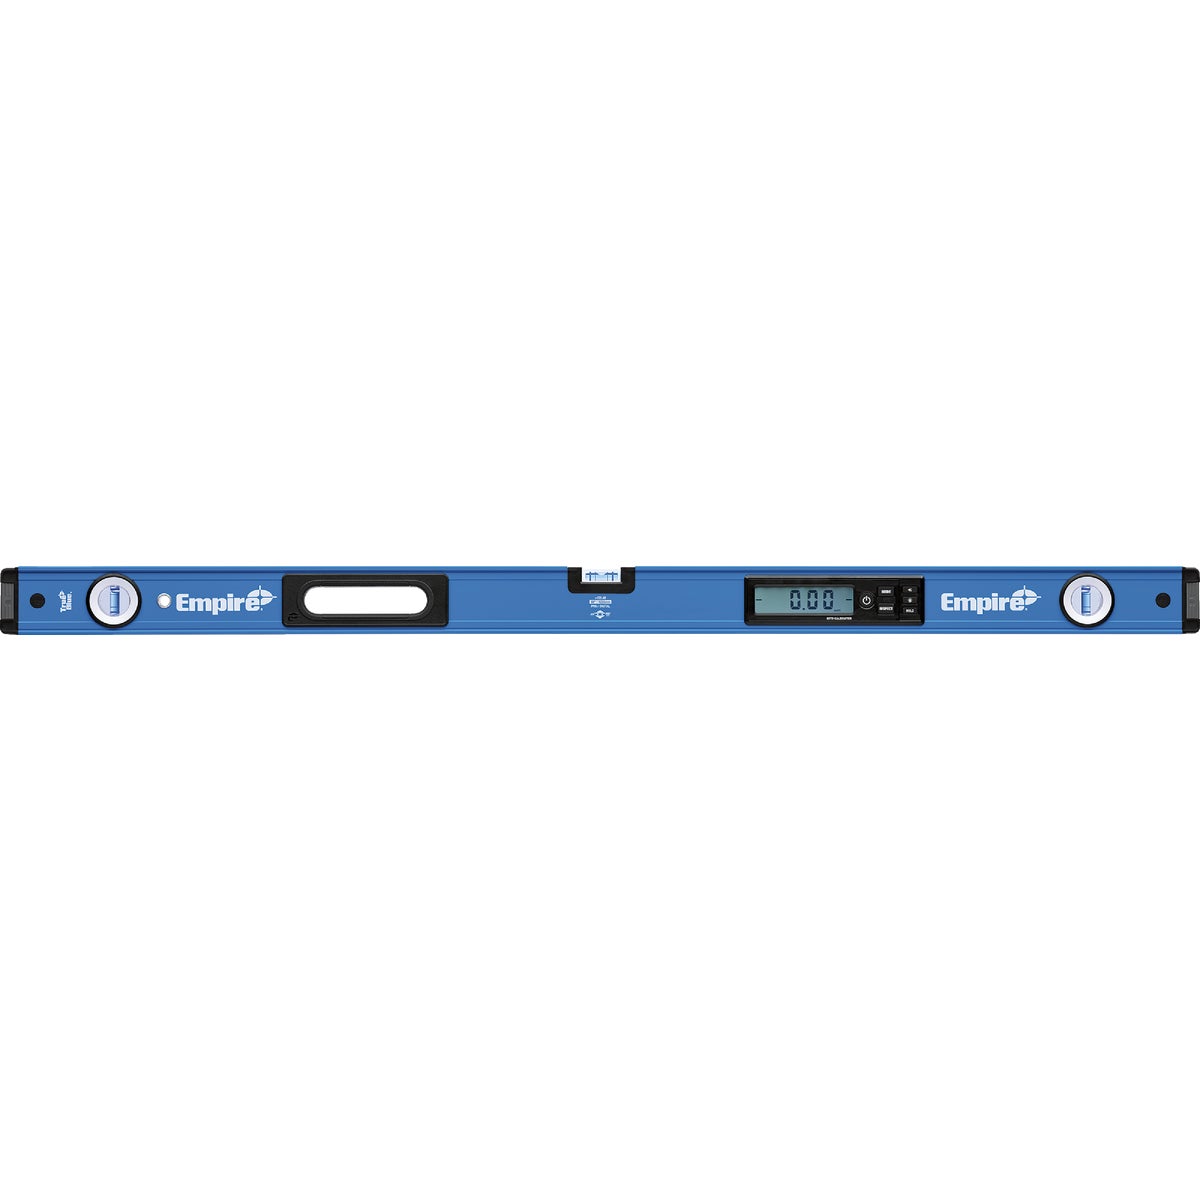 Item 303190, True Blue e105 Series digital levels offer Inspector Grade accuracy, 